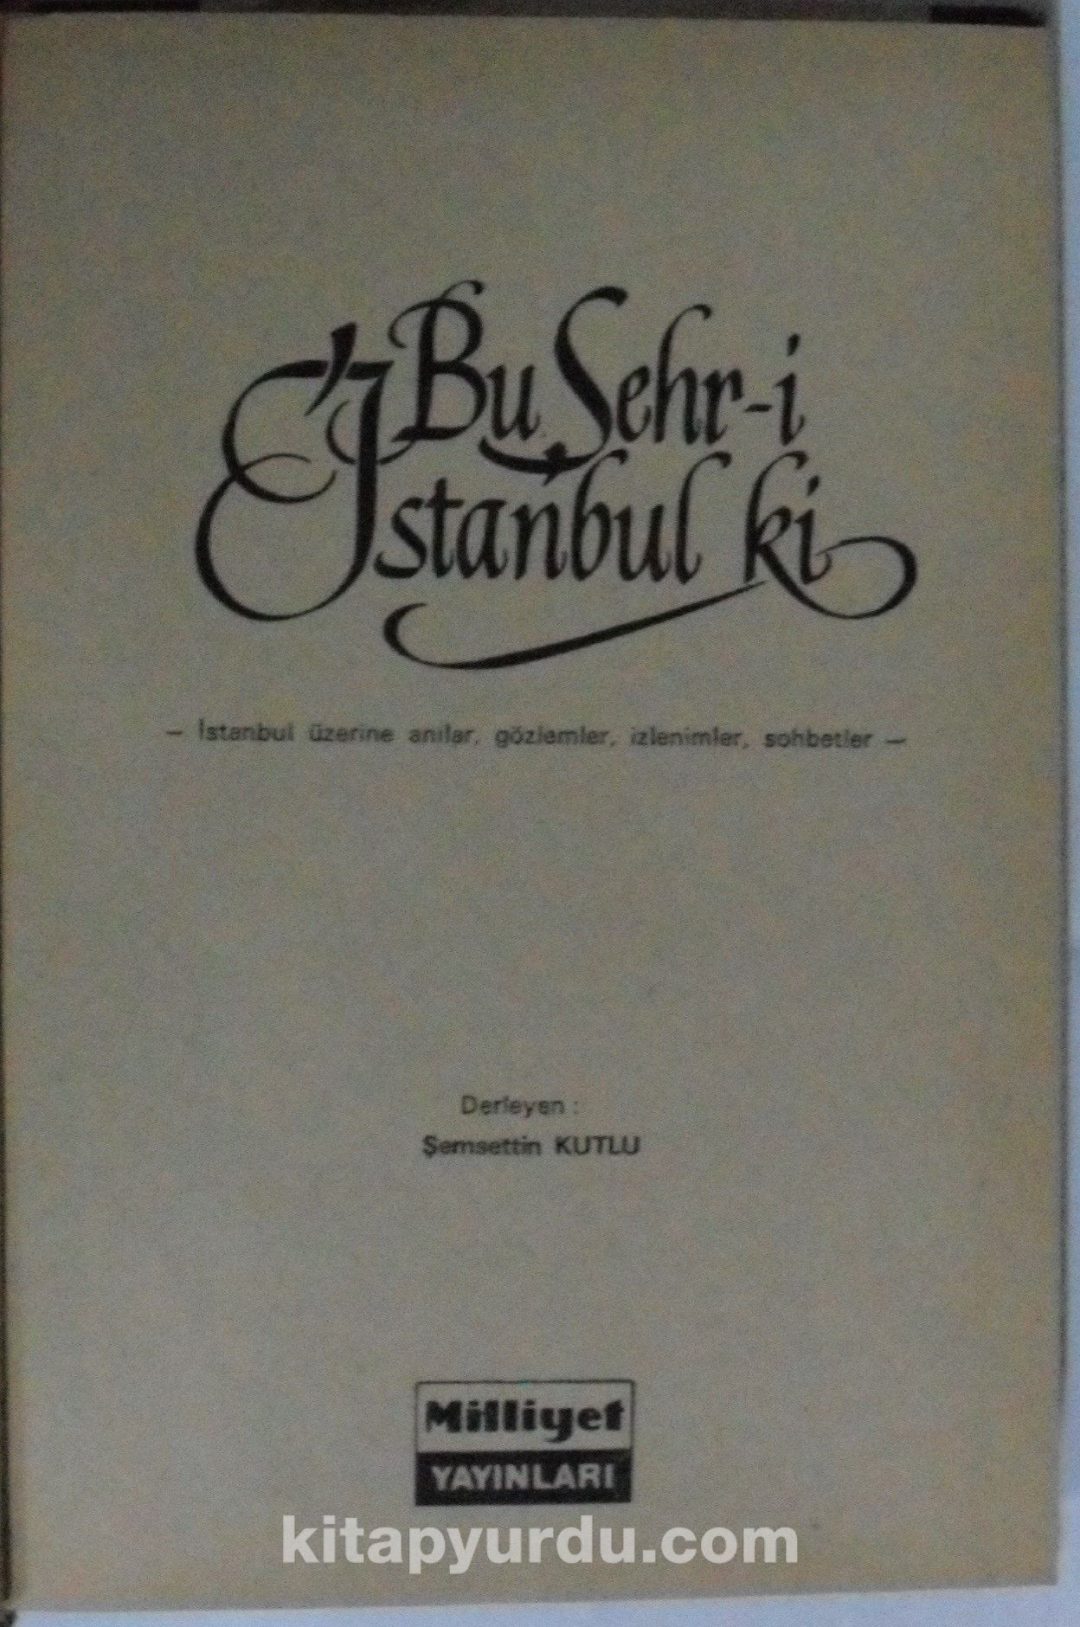 Bu Şehr-i İstanbul ki Kod: 6-D-39